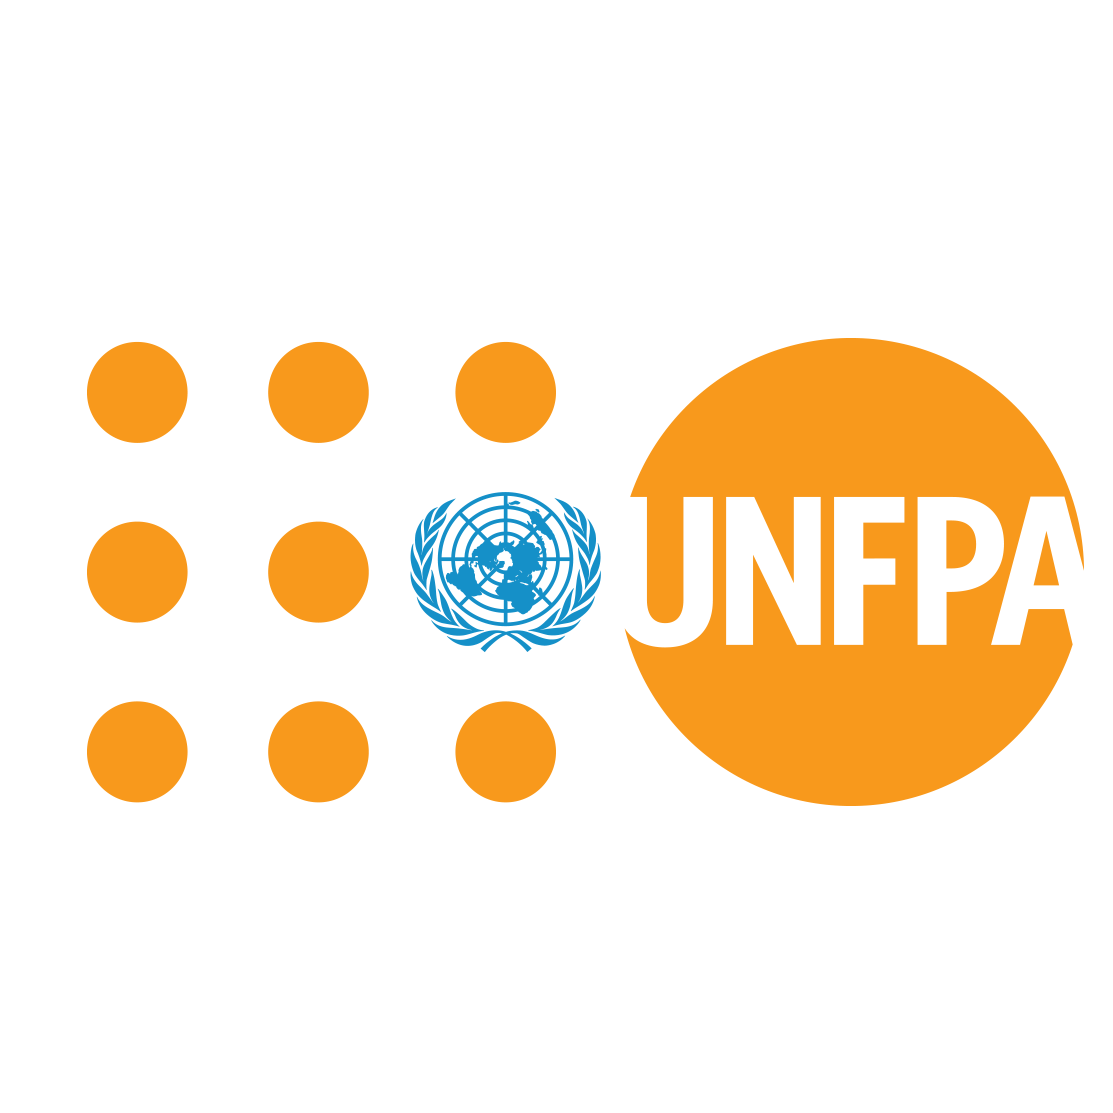 Emergency preparedness and response (UNFPA)